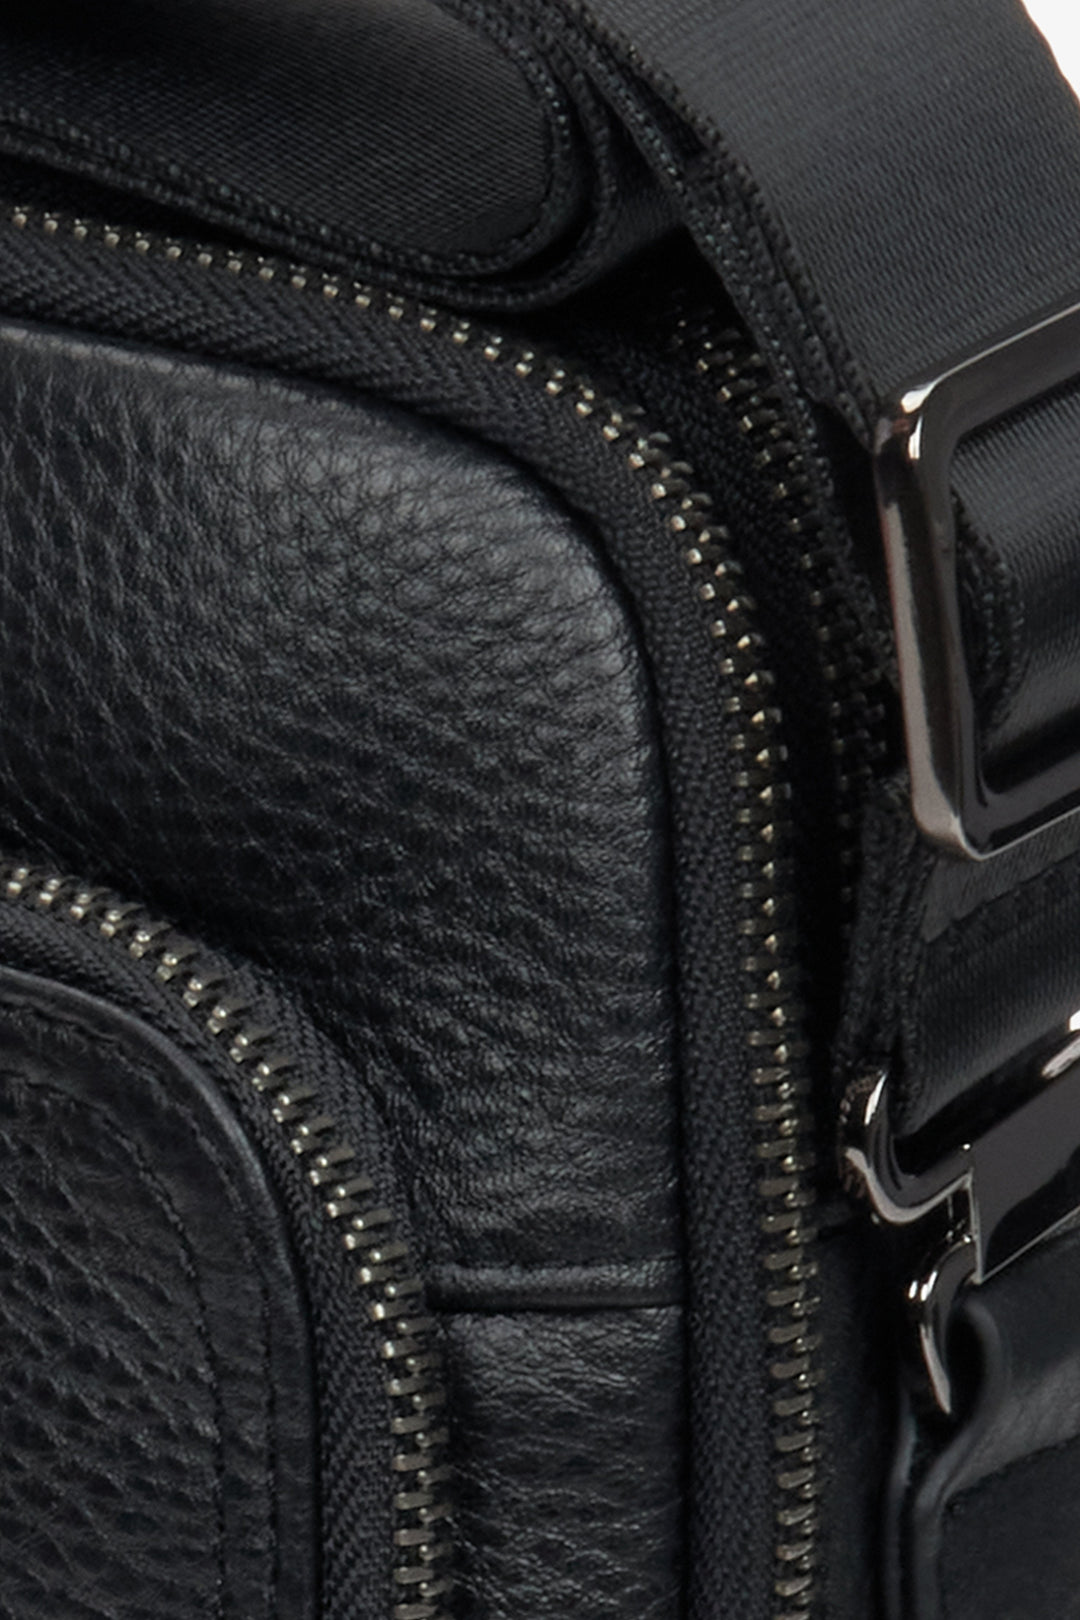 Men's black leather shoulder pouch by Estro - close-up on the detail.